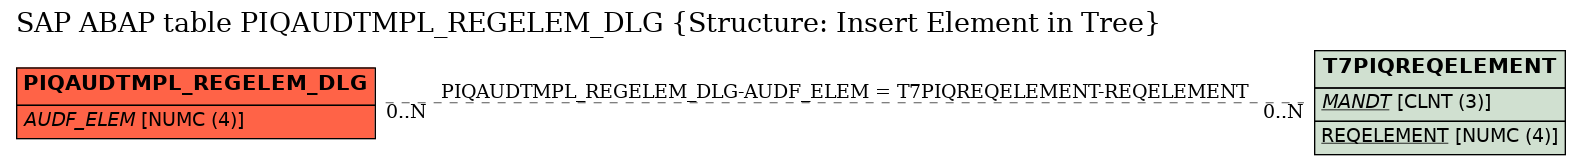 E-R Diagram for table PIQAUDTMPL_REGELEM_DLG (Structure: Insert Element in Tree)